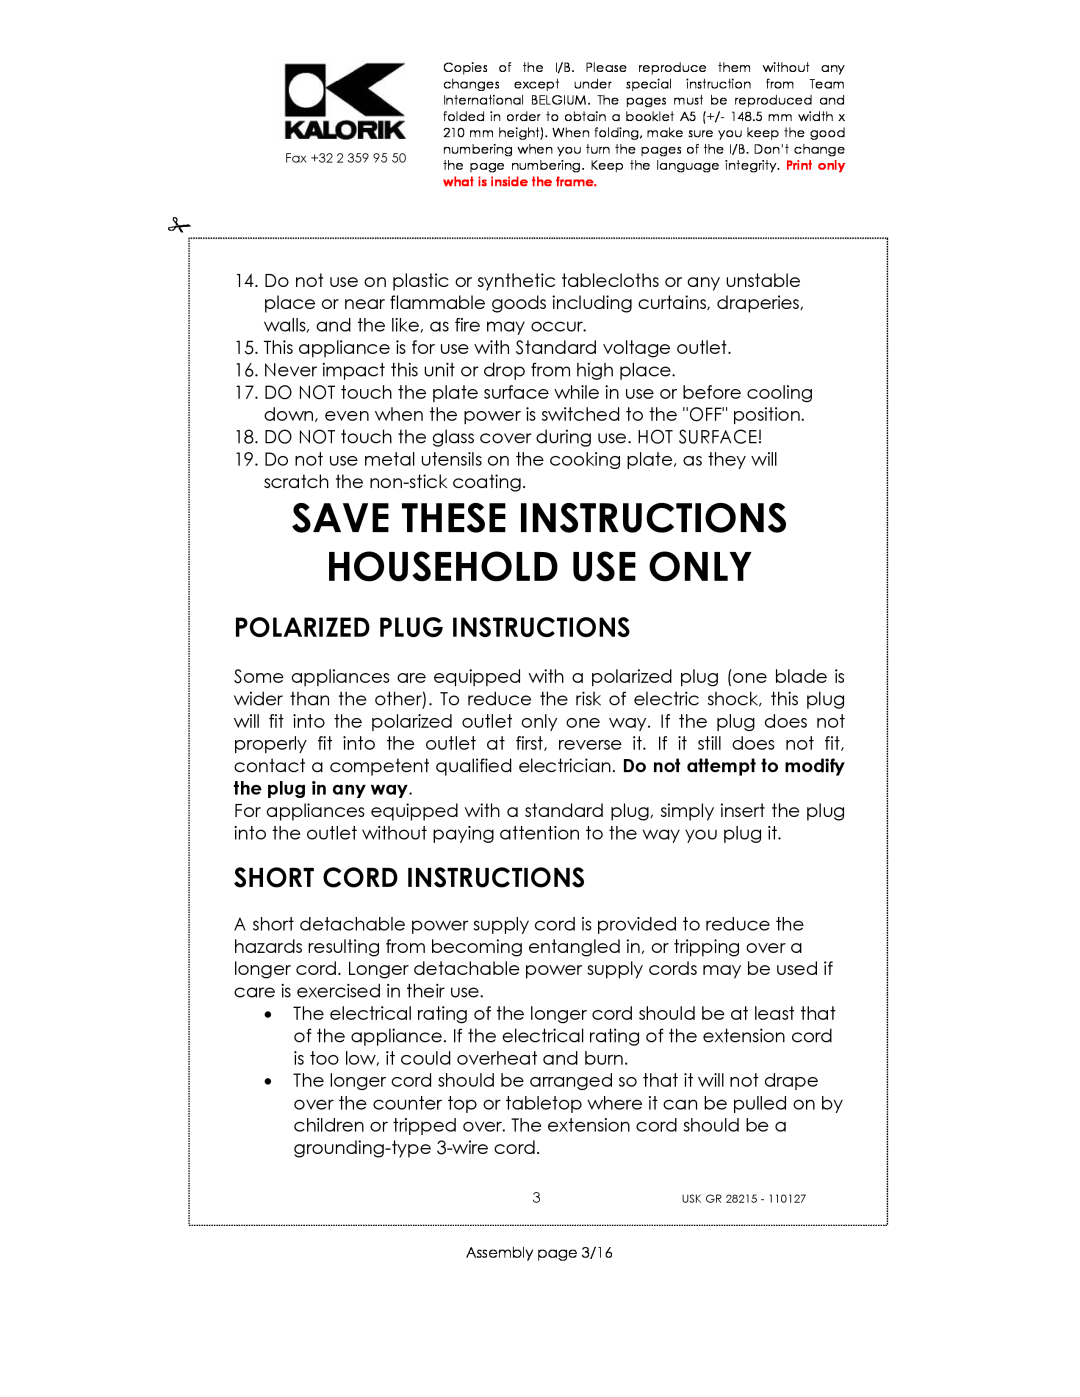 Kalorik USK GR 28215 Save These Instructions Household Use Only, Polarized Plug Instructions, Short Cord Instructions 